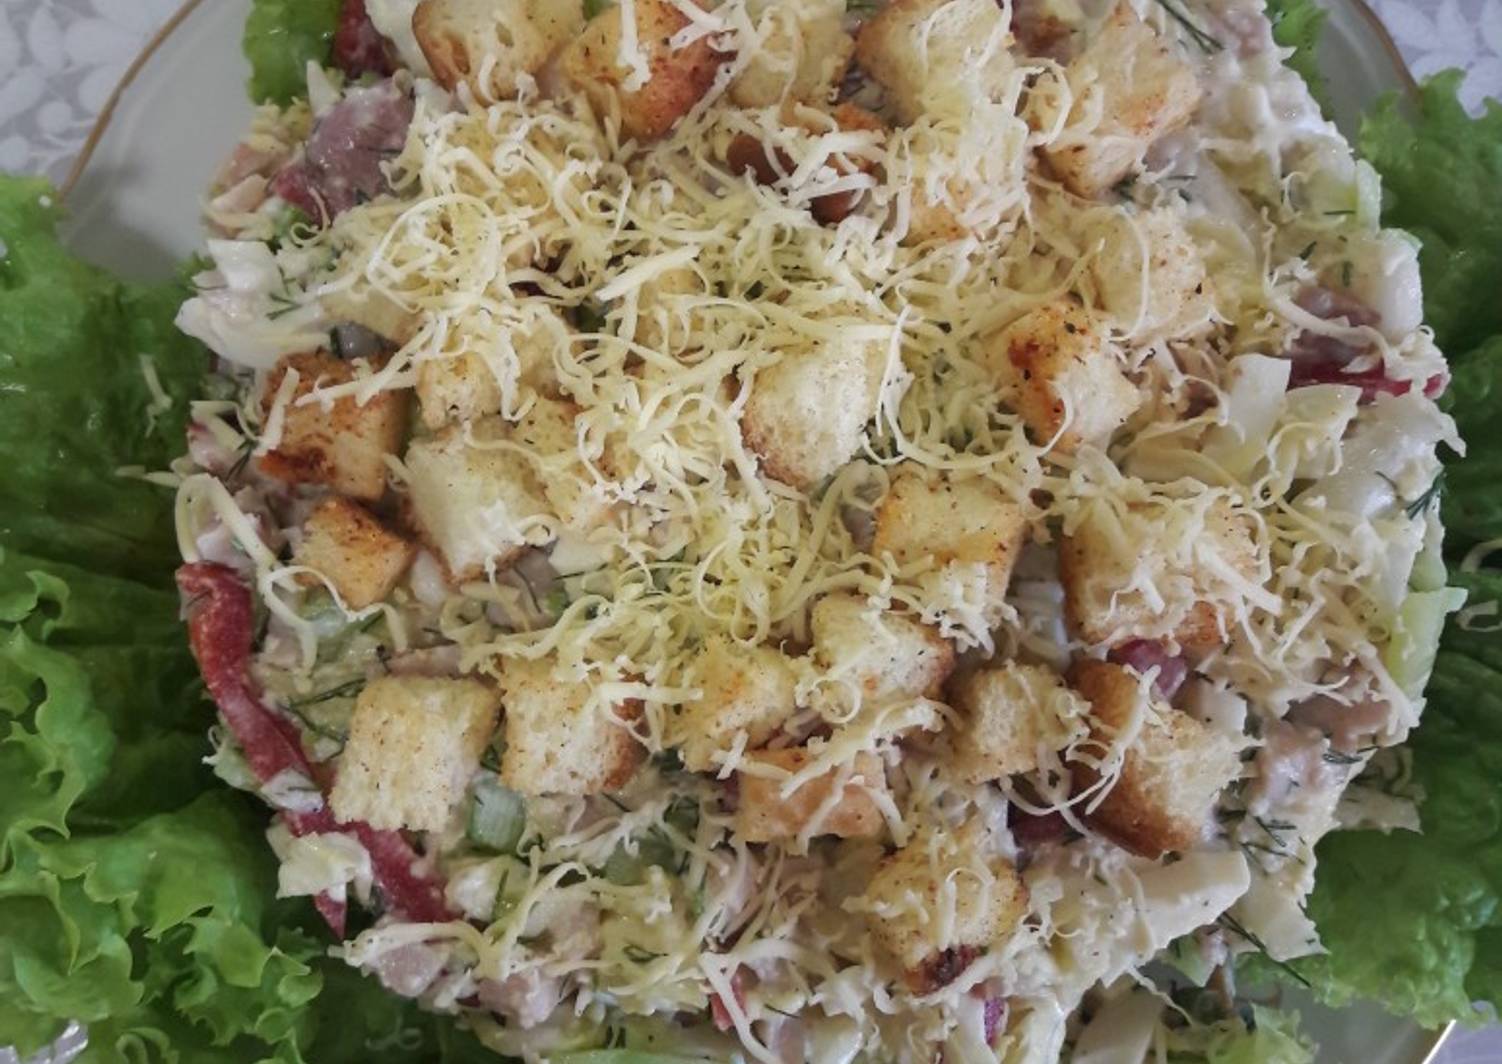 Рецепт салата цезарь с тунцом пошагово с фото